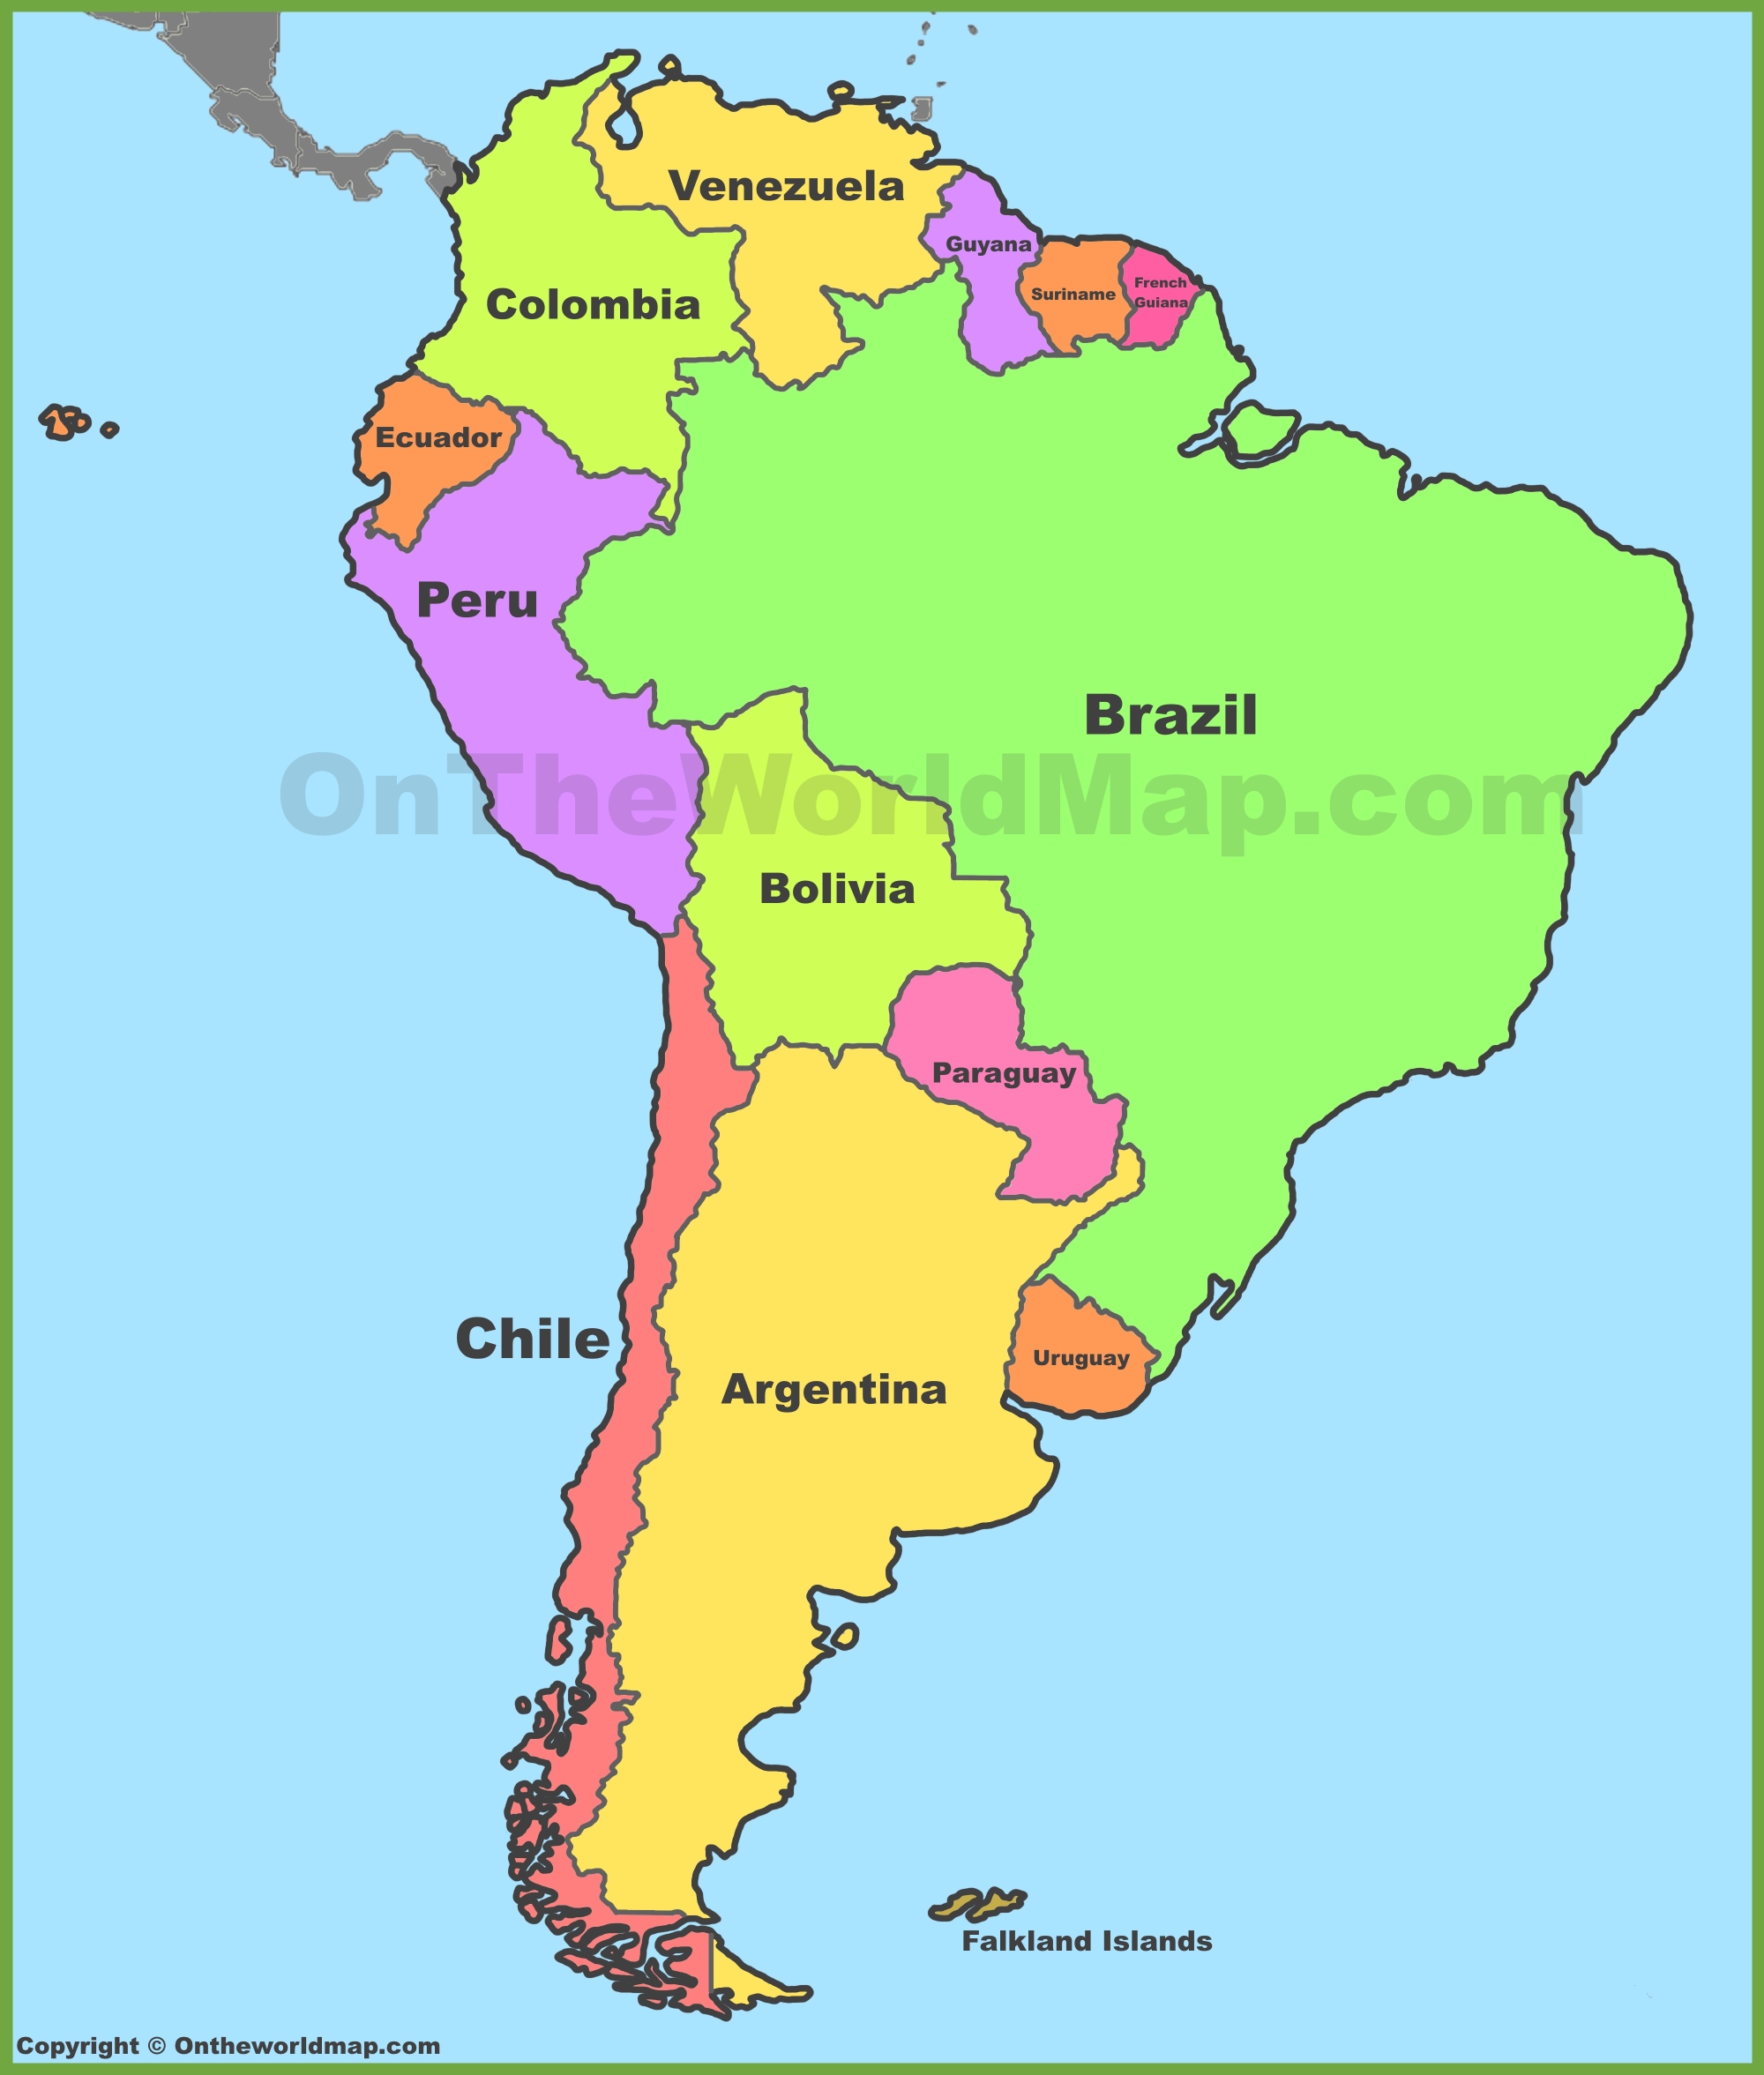 South America Maps | Maps of South America - OnTheWorldMap.com ﻿